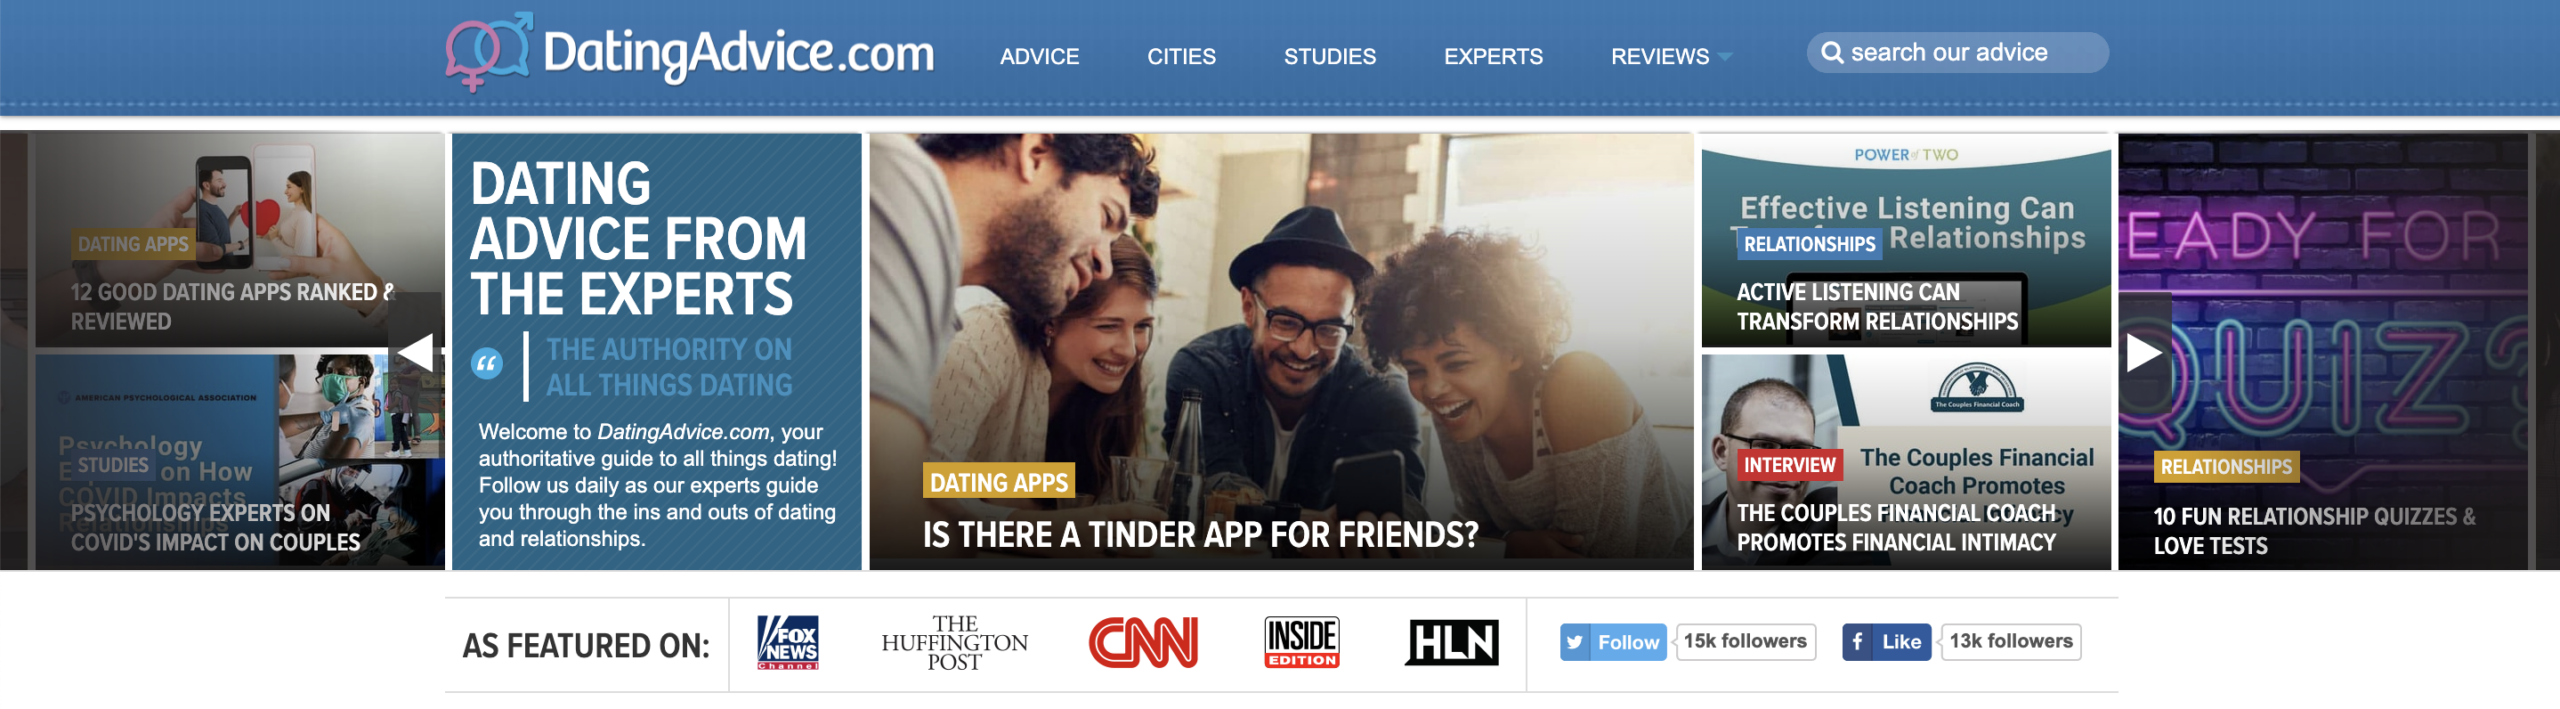 dating advice homepage